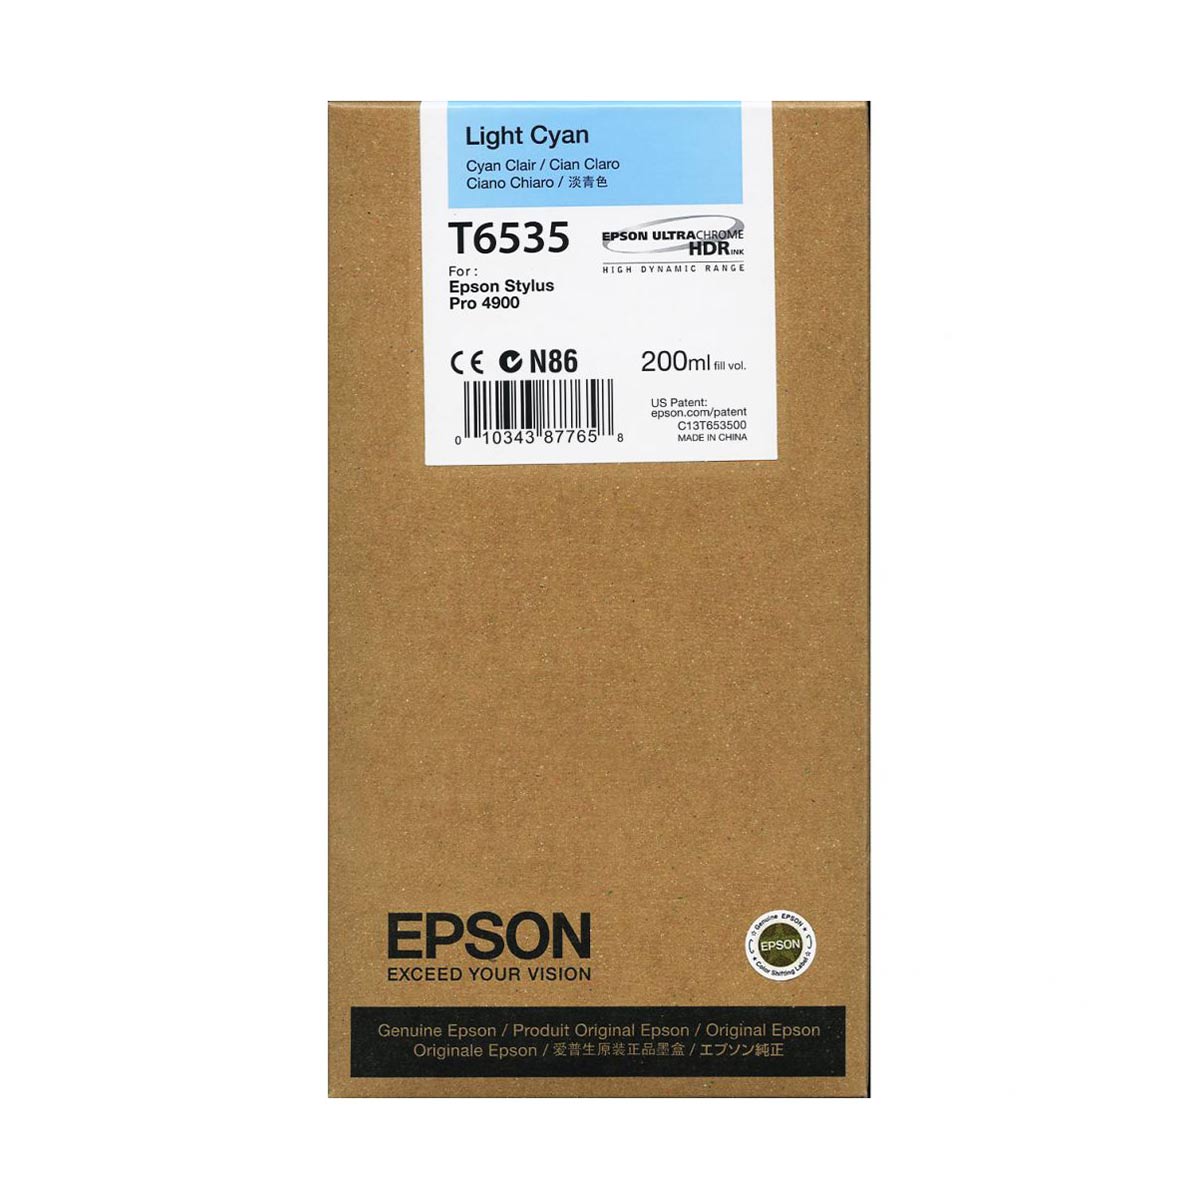 Epson T6535 4900 Ultrachrome Ink HDR 200ml Light Cyan